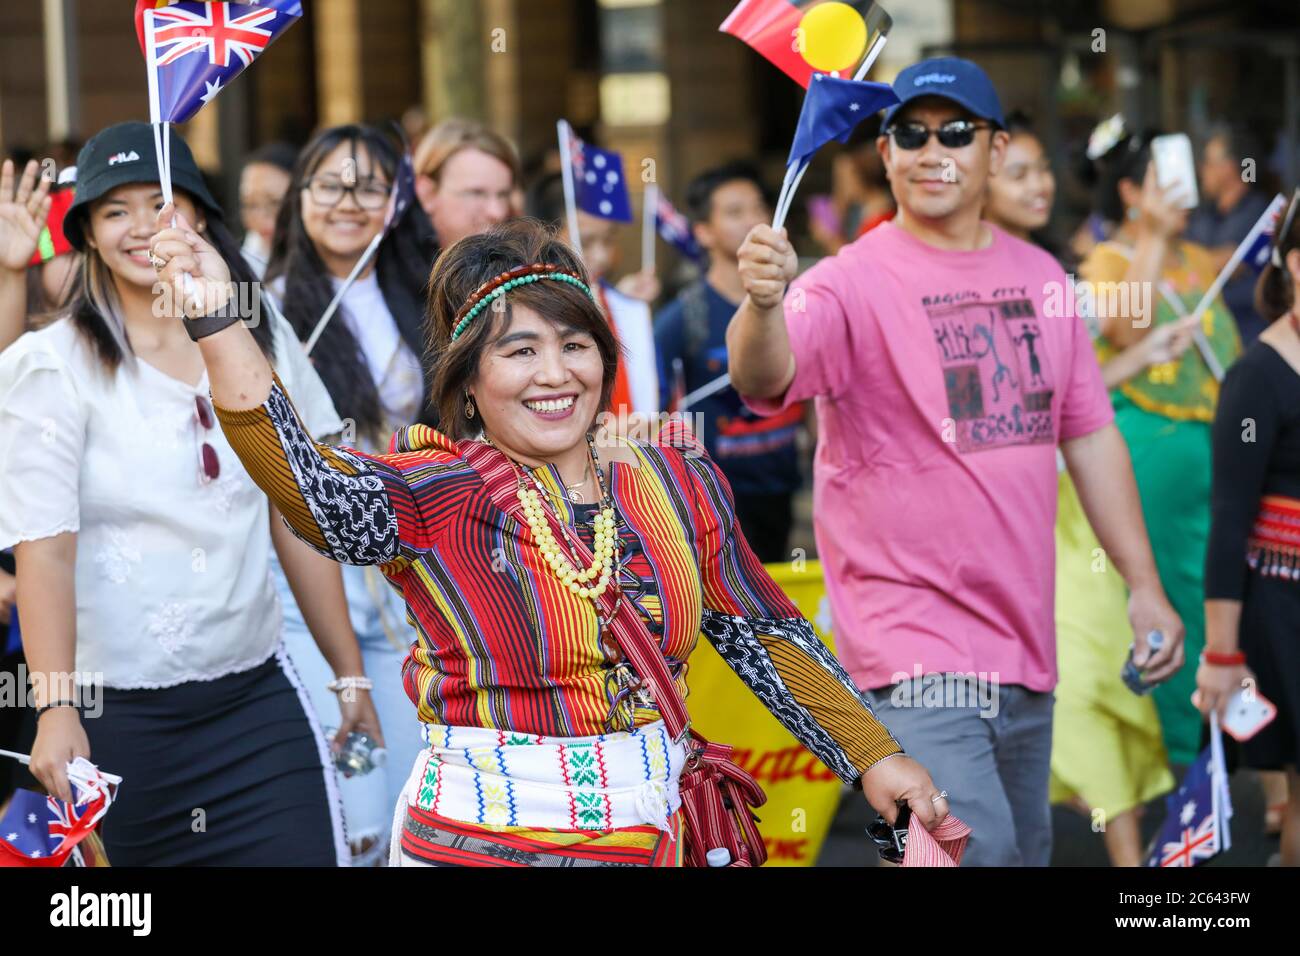 ADELAIDE, SOUTH AUSTRALIA January 26, 2020: Australia Day 2020 parade and celebrations in Adelaide, South Australia Stock Photo